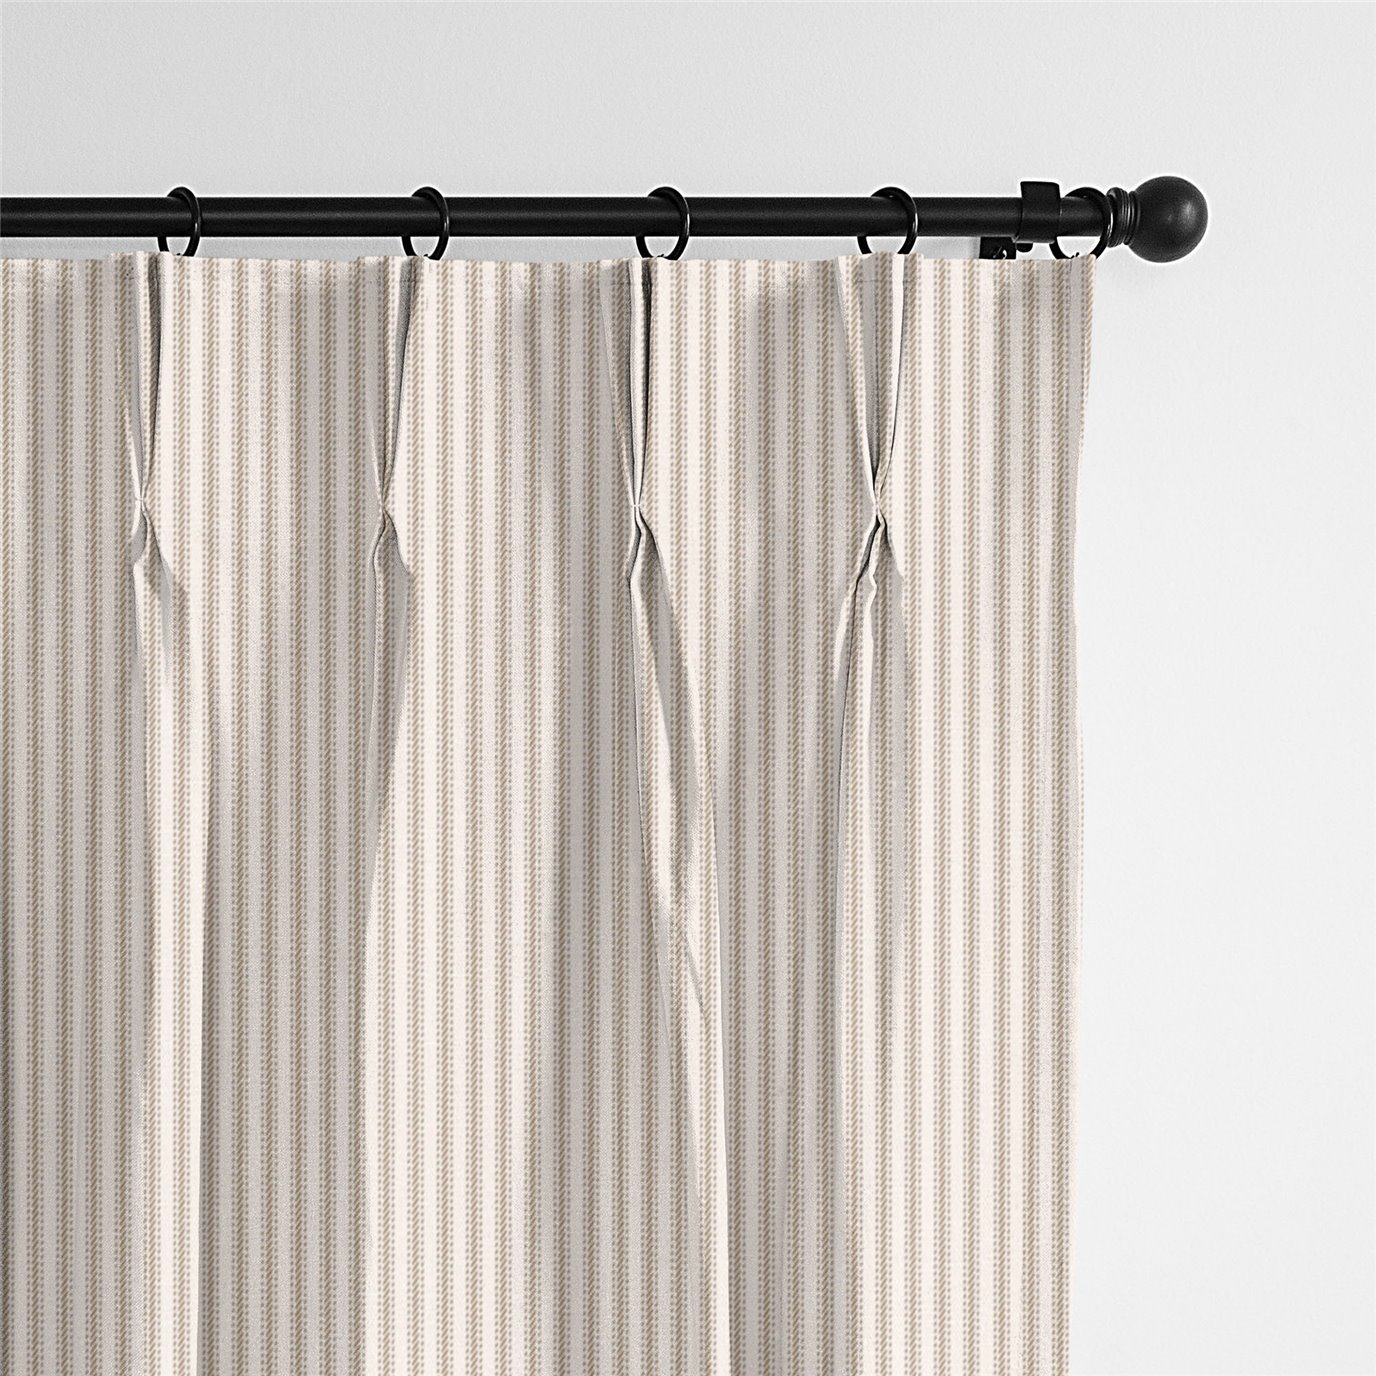 Cruz Ticking Stripes Taupe/Ivory Pinch Pleat Drapery Panel - Pair - Size 20"x120"